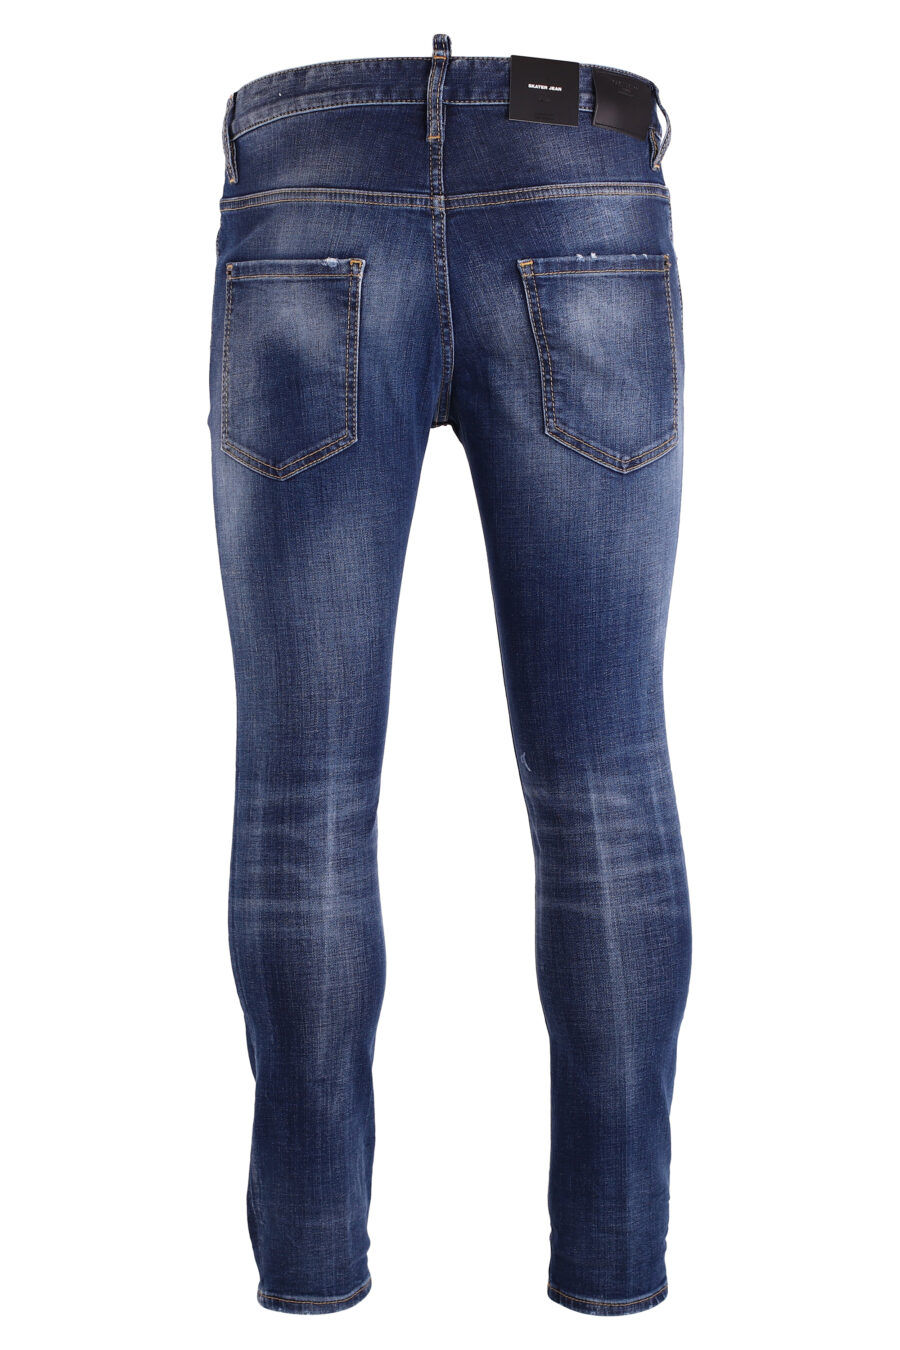 Jeans "Skaterjeans" blau getragen - IMG 8992